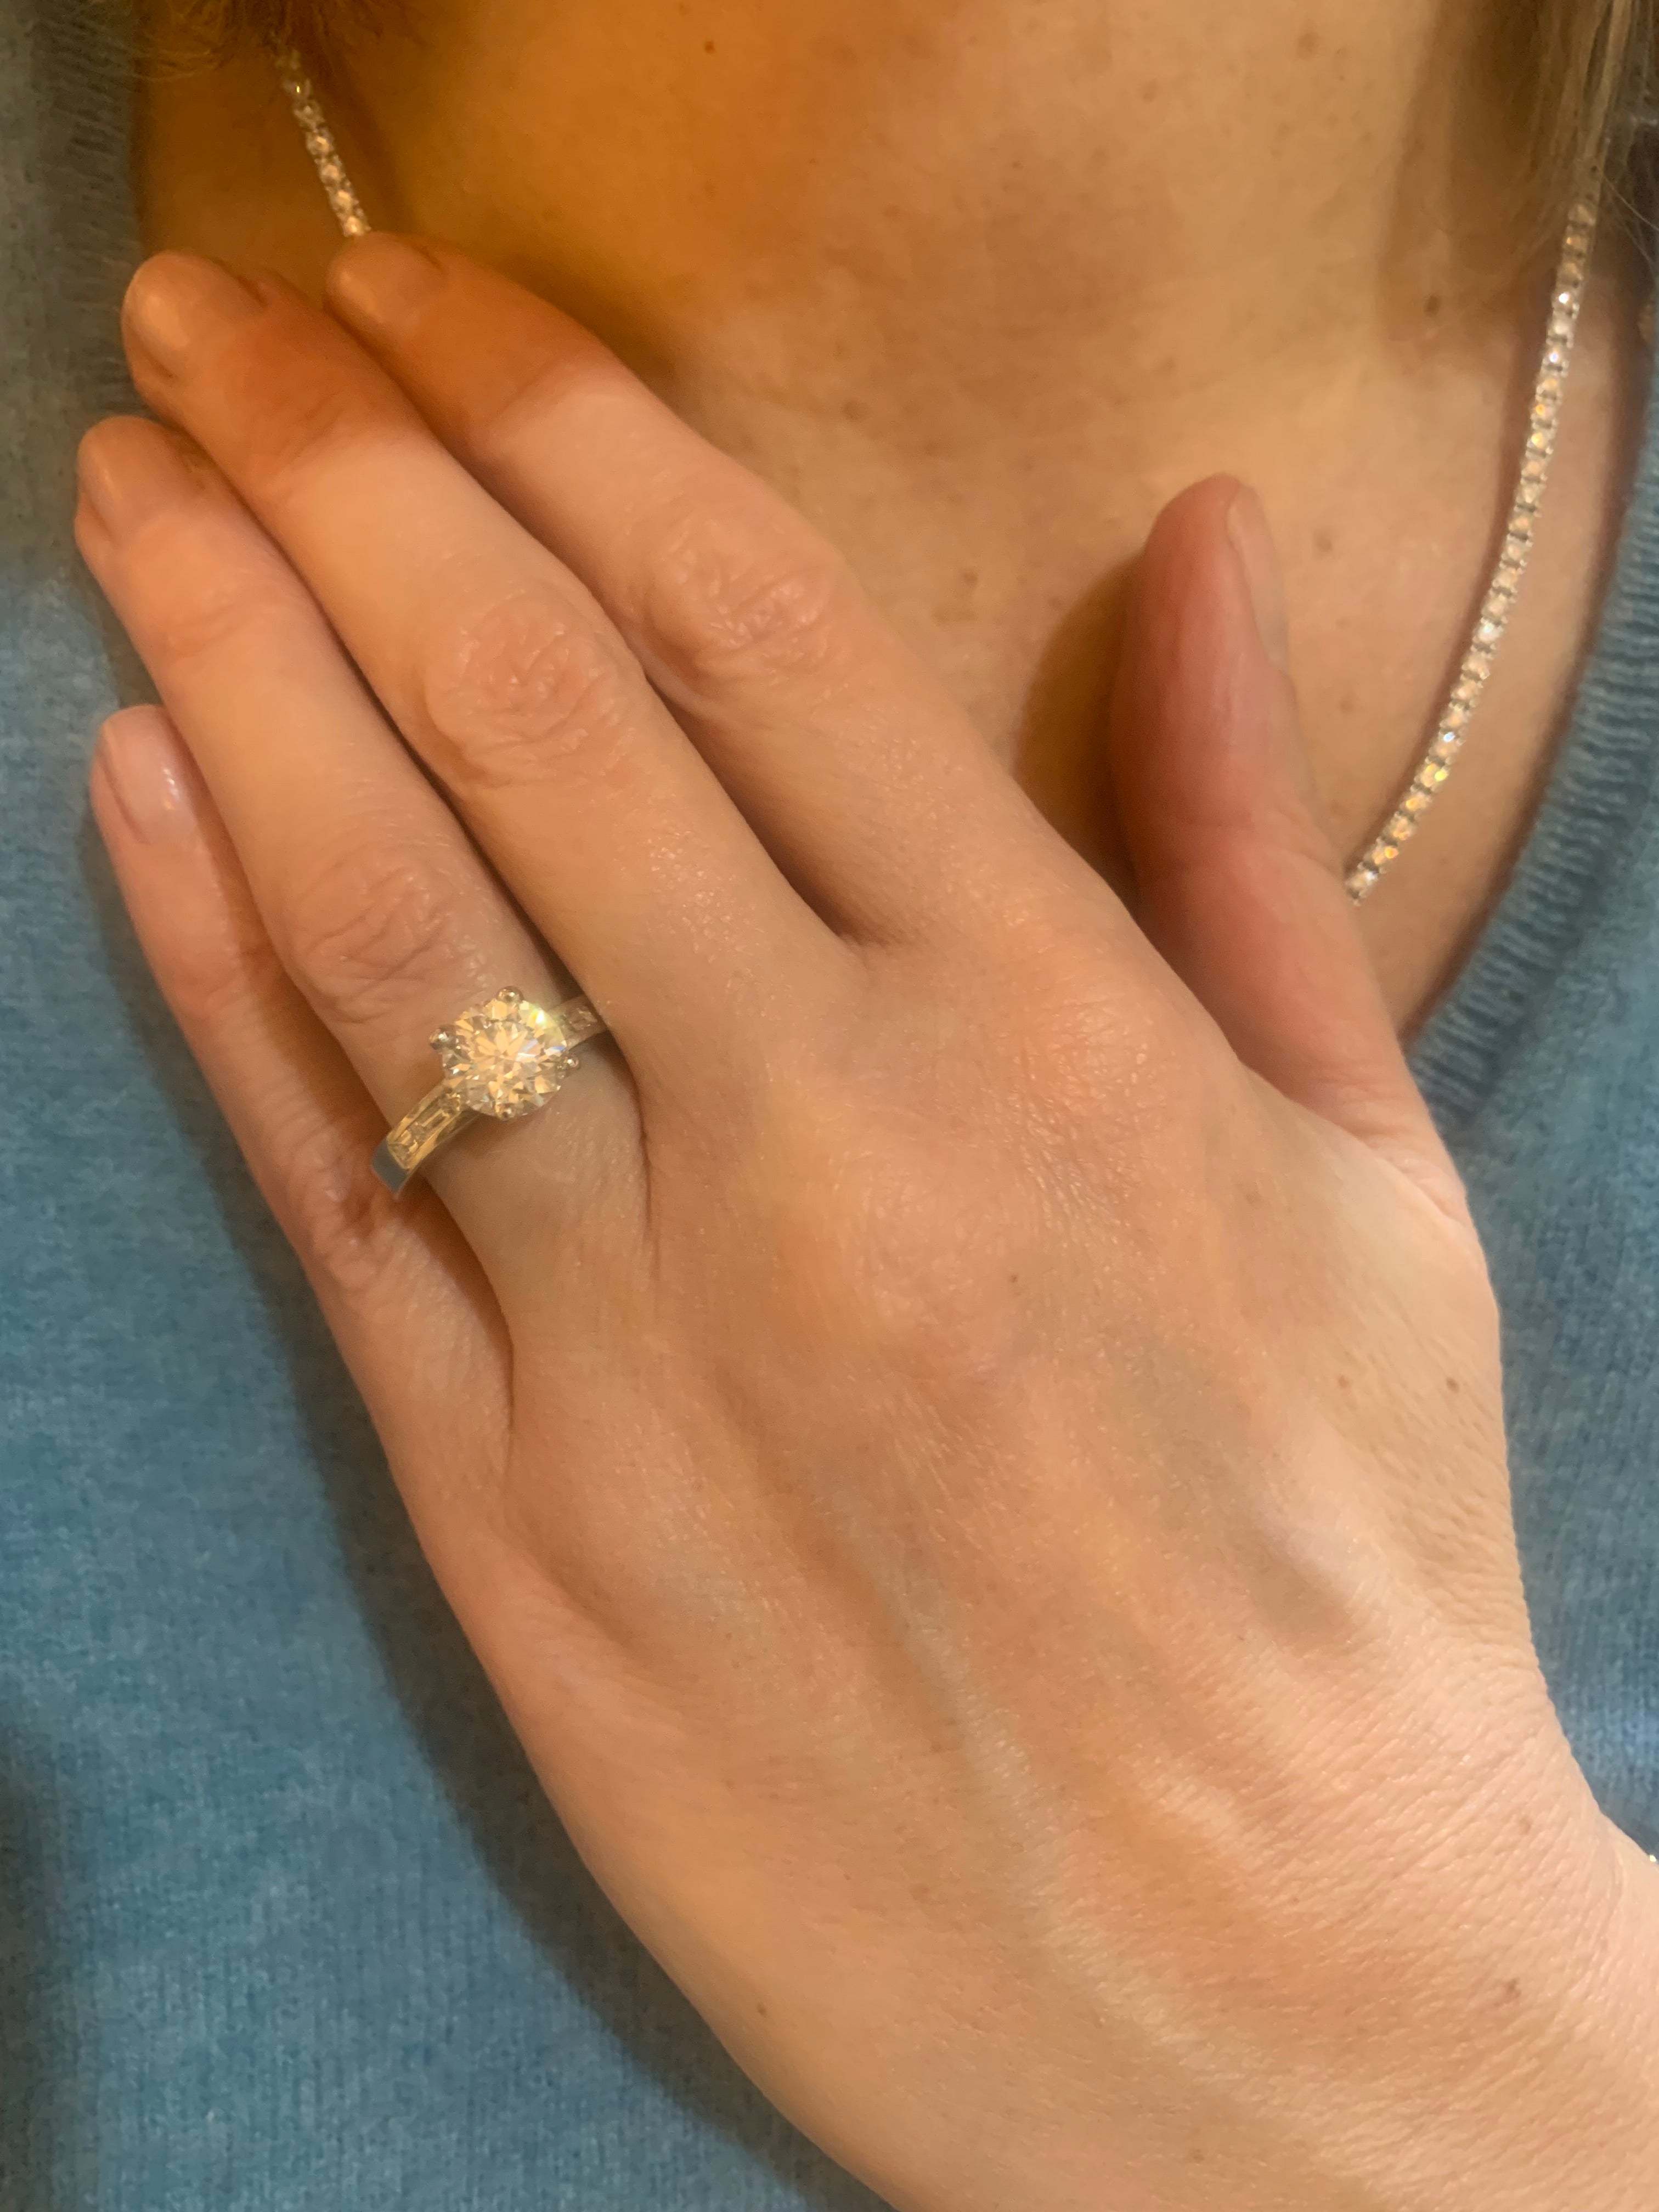 18kt white gold flat-link diamond ring